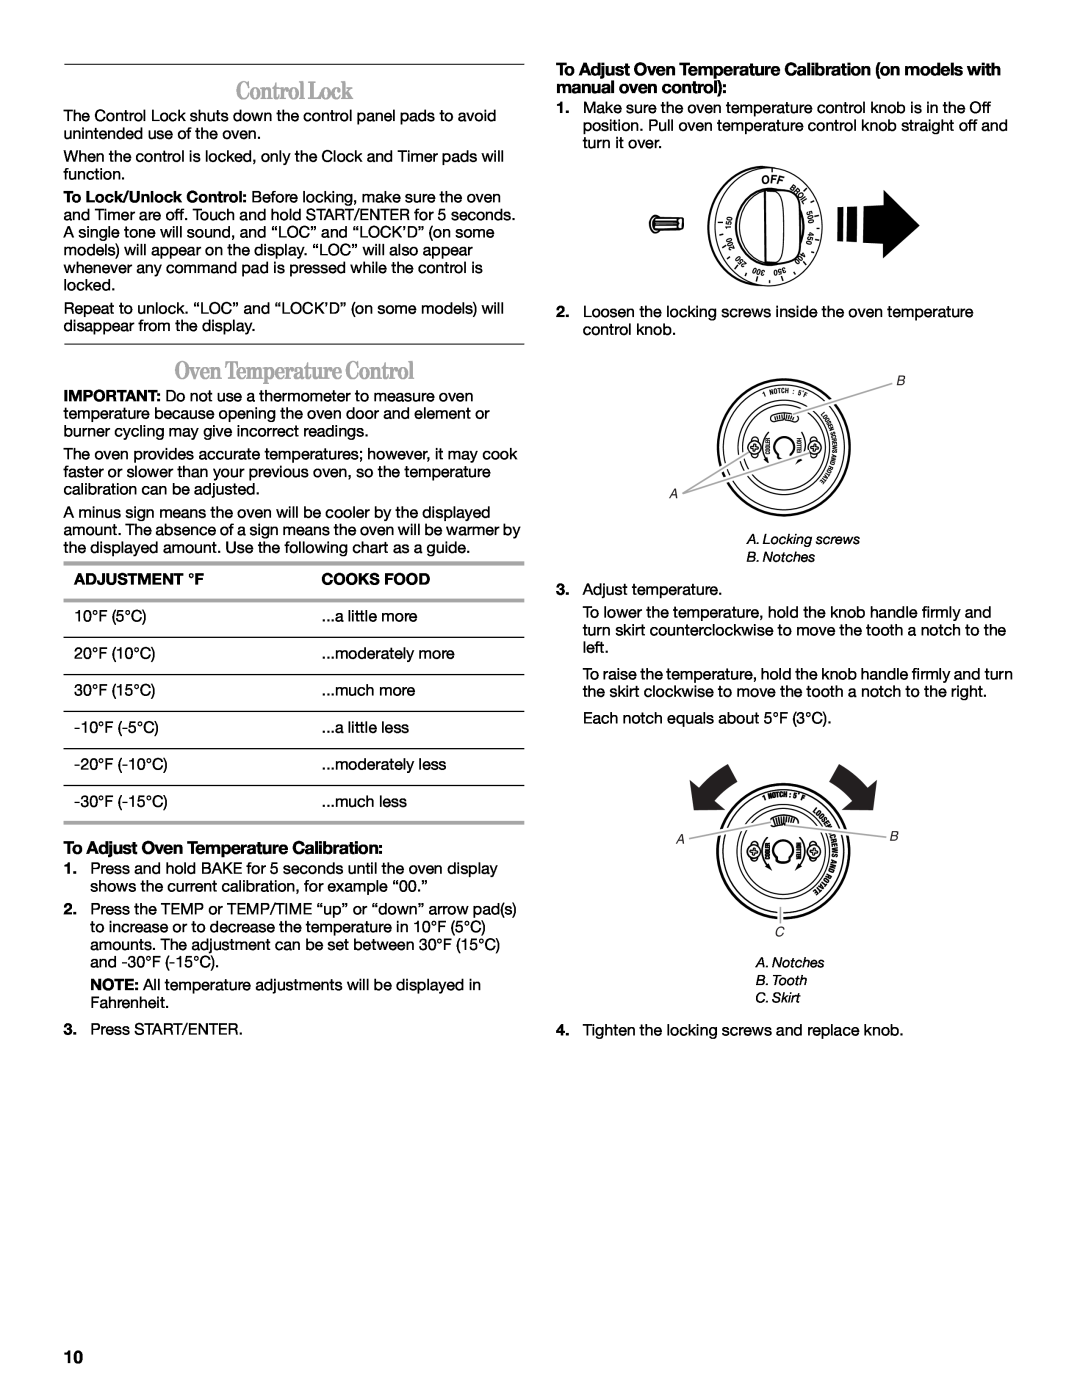 Whirlpool 9762358A manual Control Lock, Oven Temperature Control, To Adjust Oven Temperature Calibration 